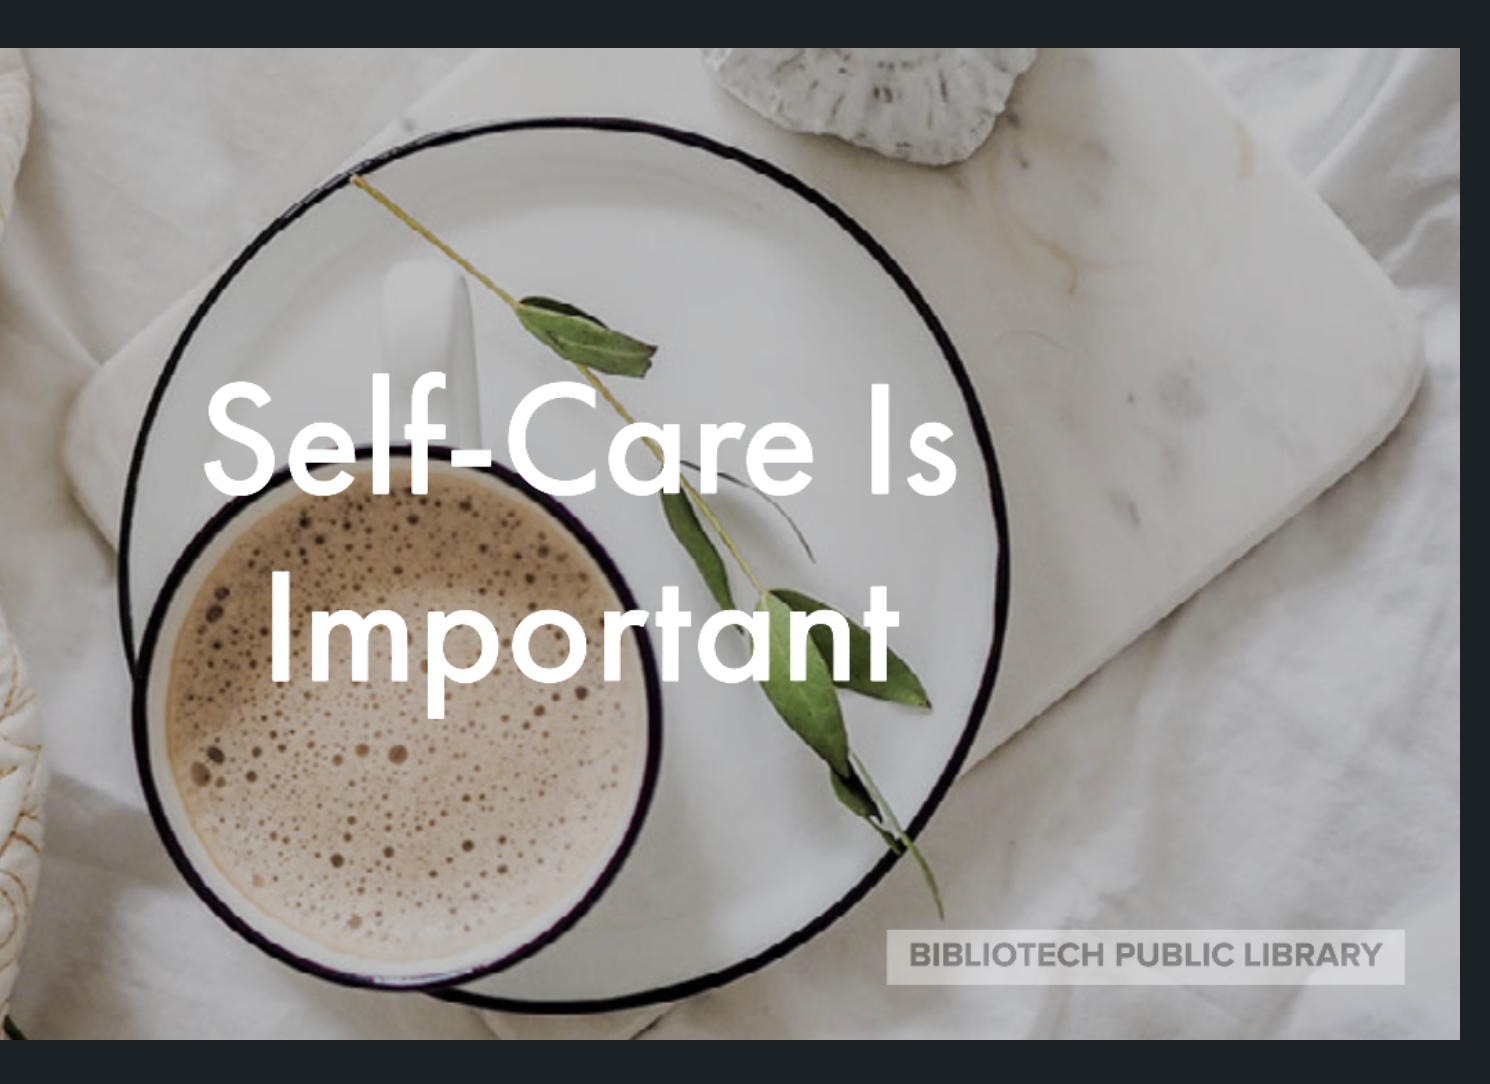 International Self-Care Day